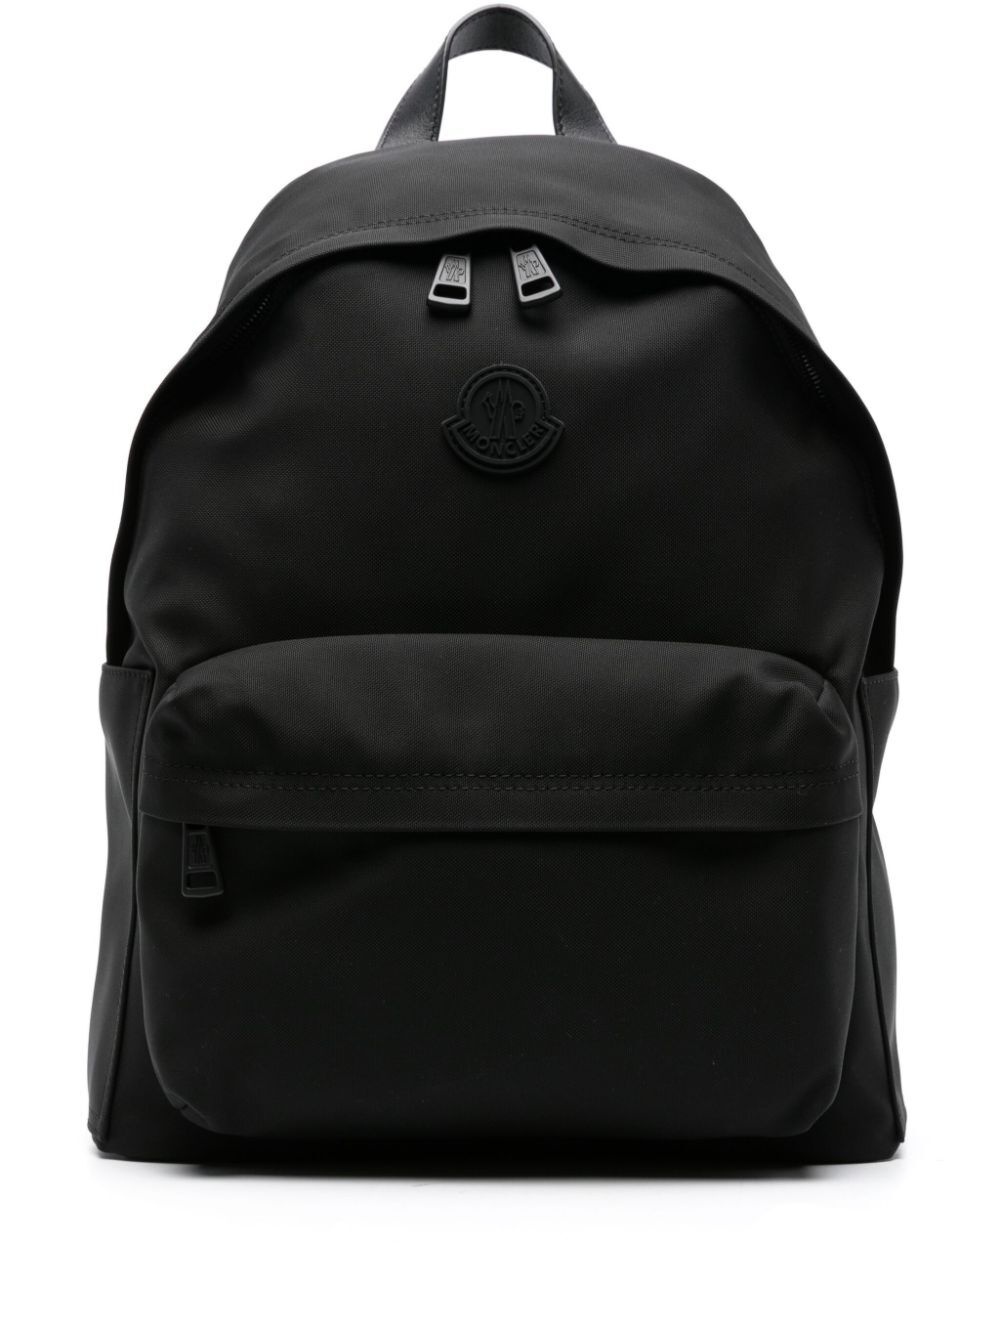 New pierrick backpack - 1